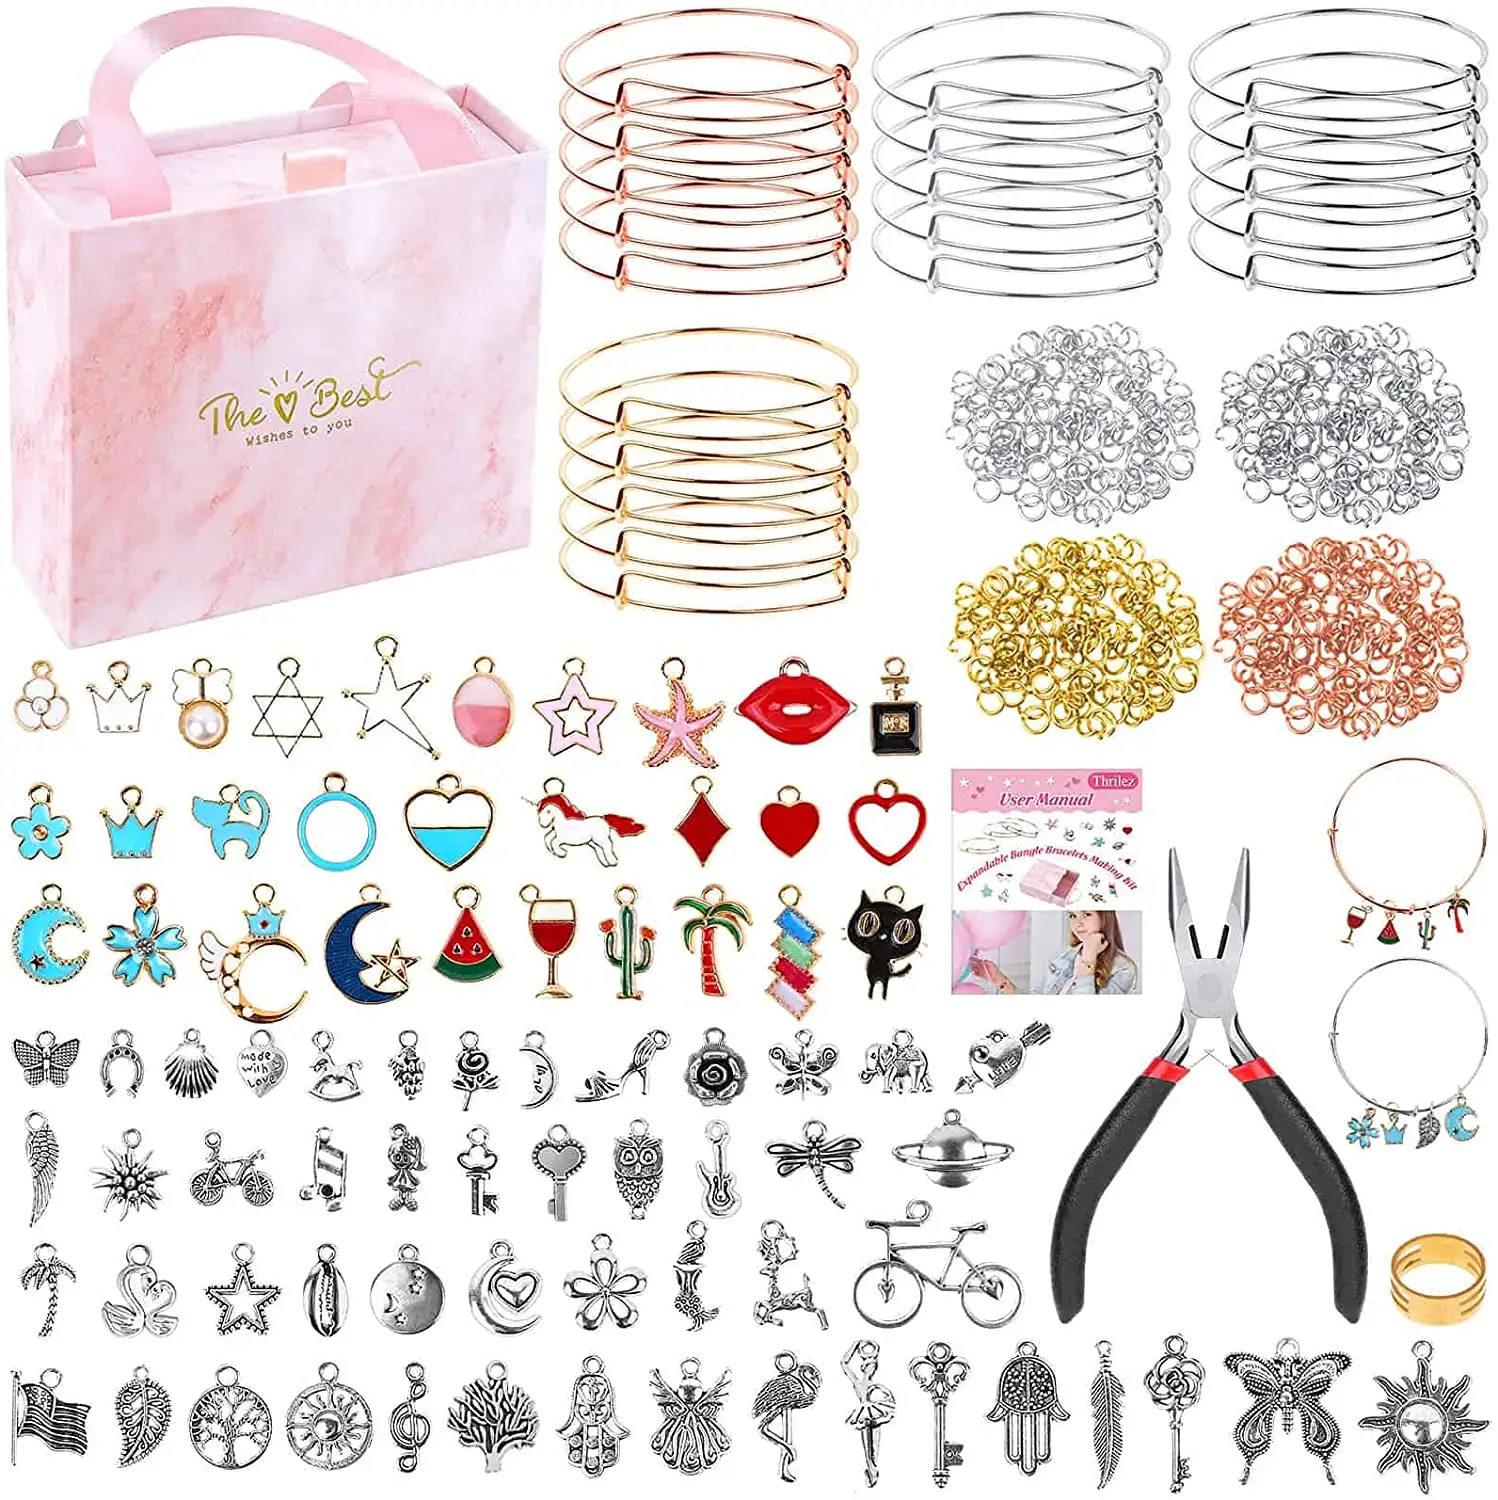 2021 Diy Charm Bracelet Making Kit For Girls Crystal Jewelry Box Making Jewelry Material Bracelet Charms For Jewelry MakingBrace